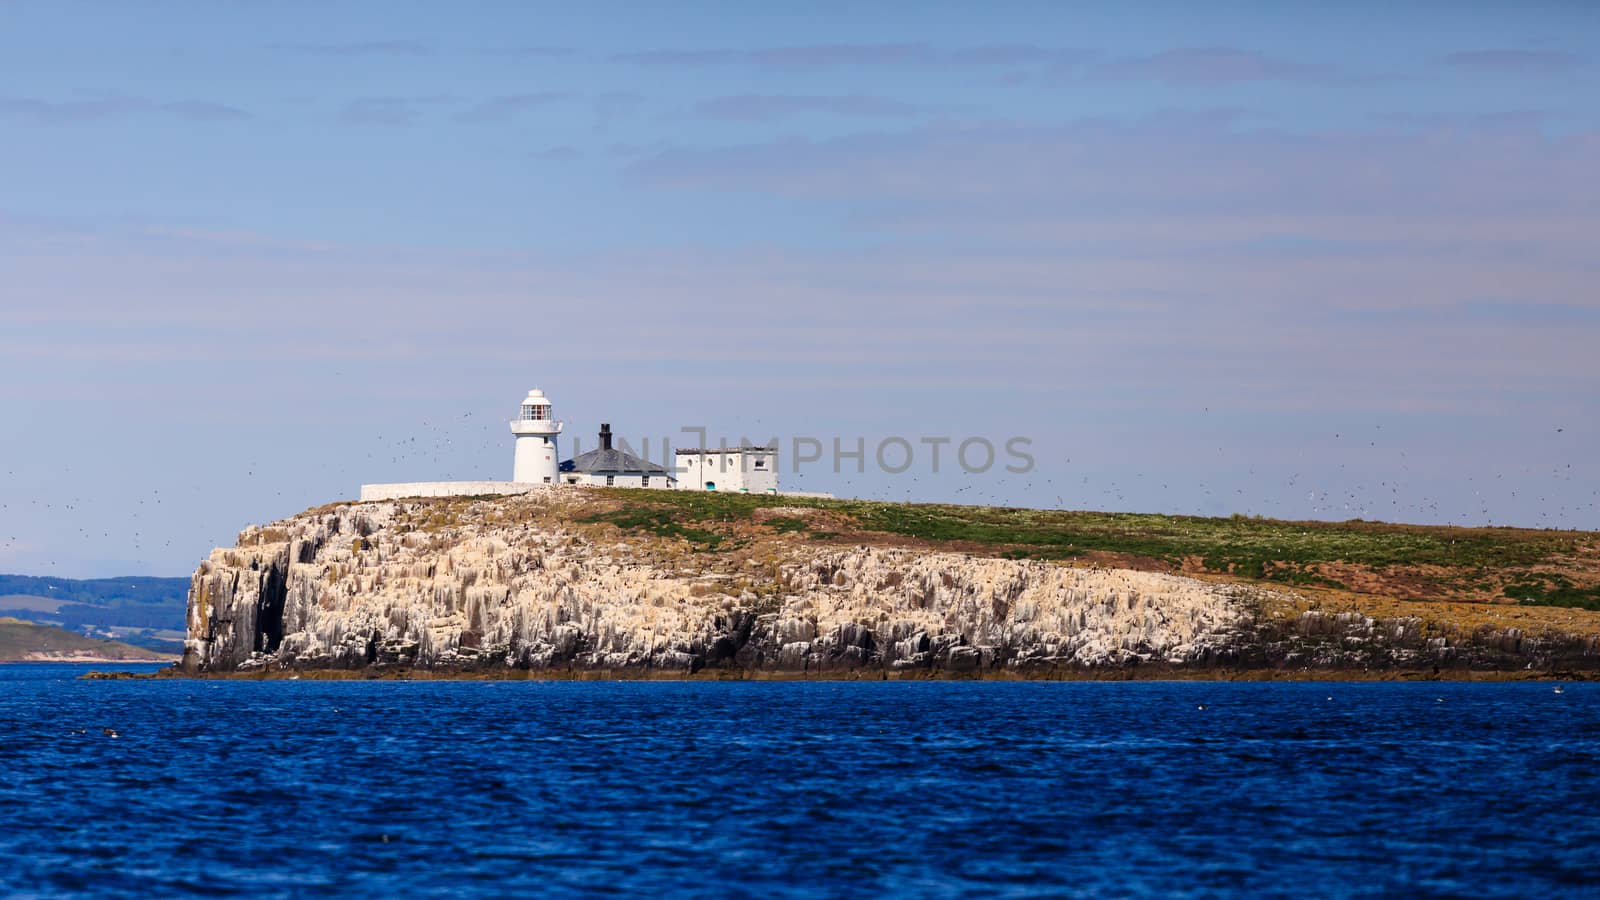 Farne Islands Lighthouse by ATGImages